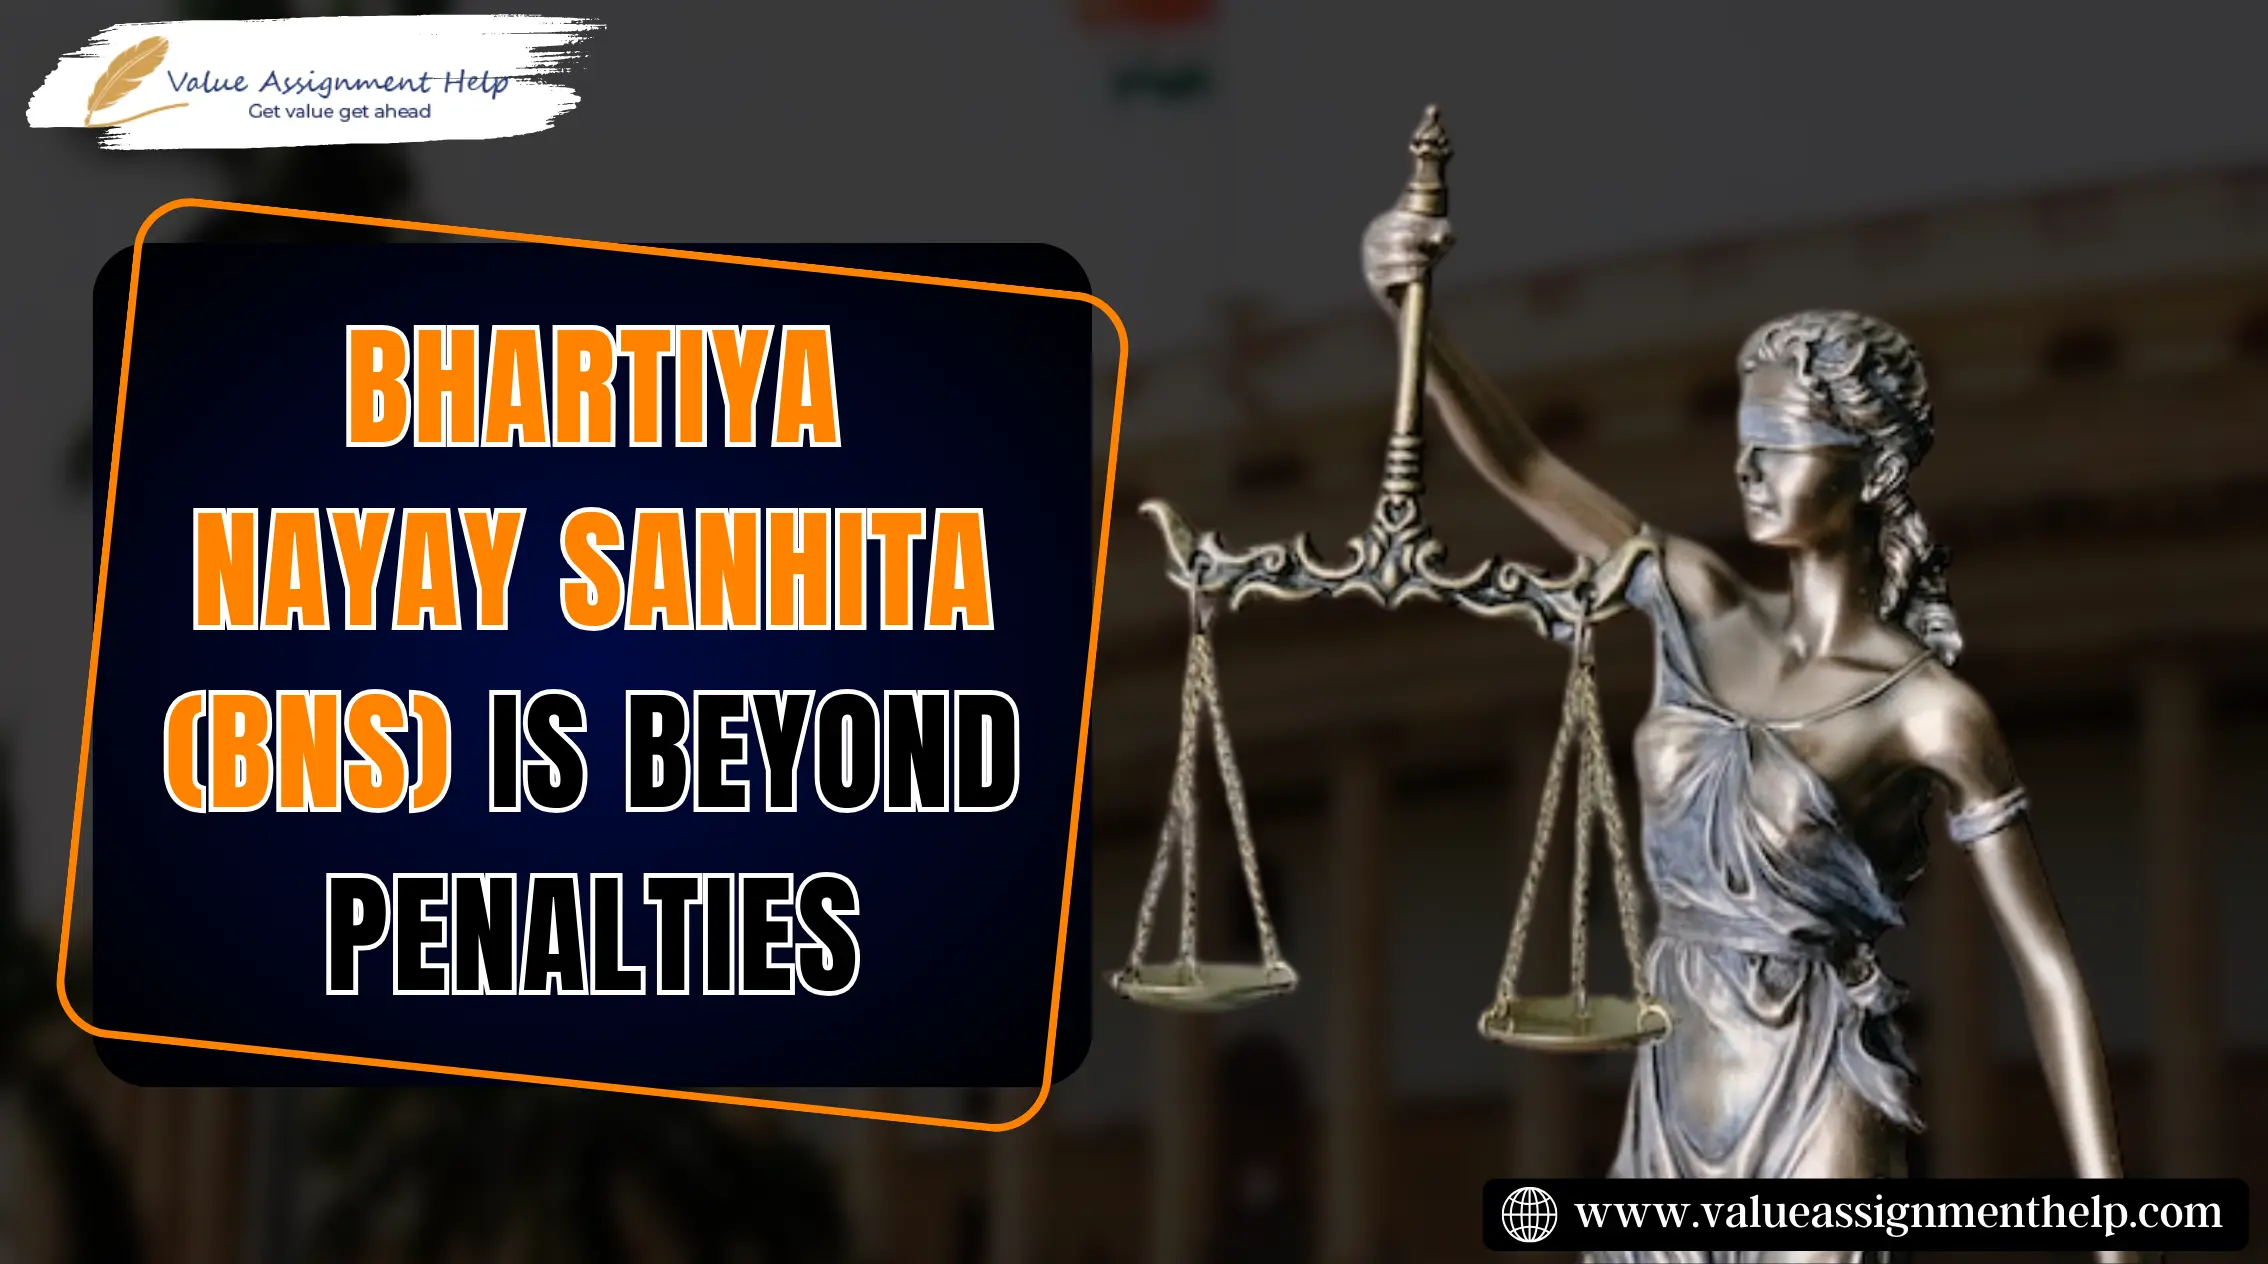  Bhartiya Nyaya Sanhita (BNS) law is beyond penalties